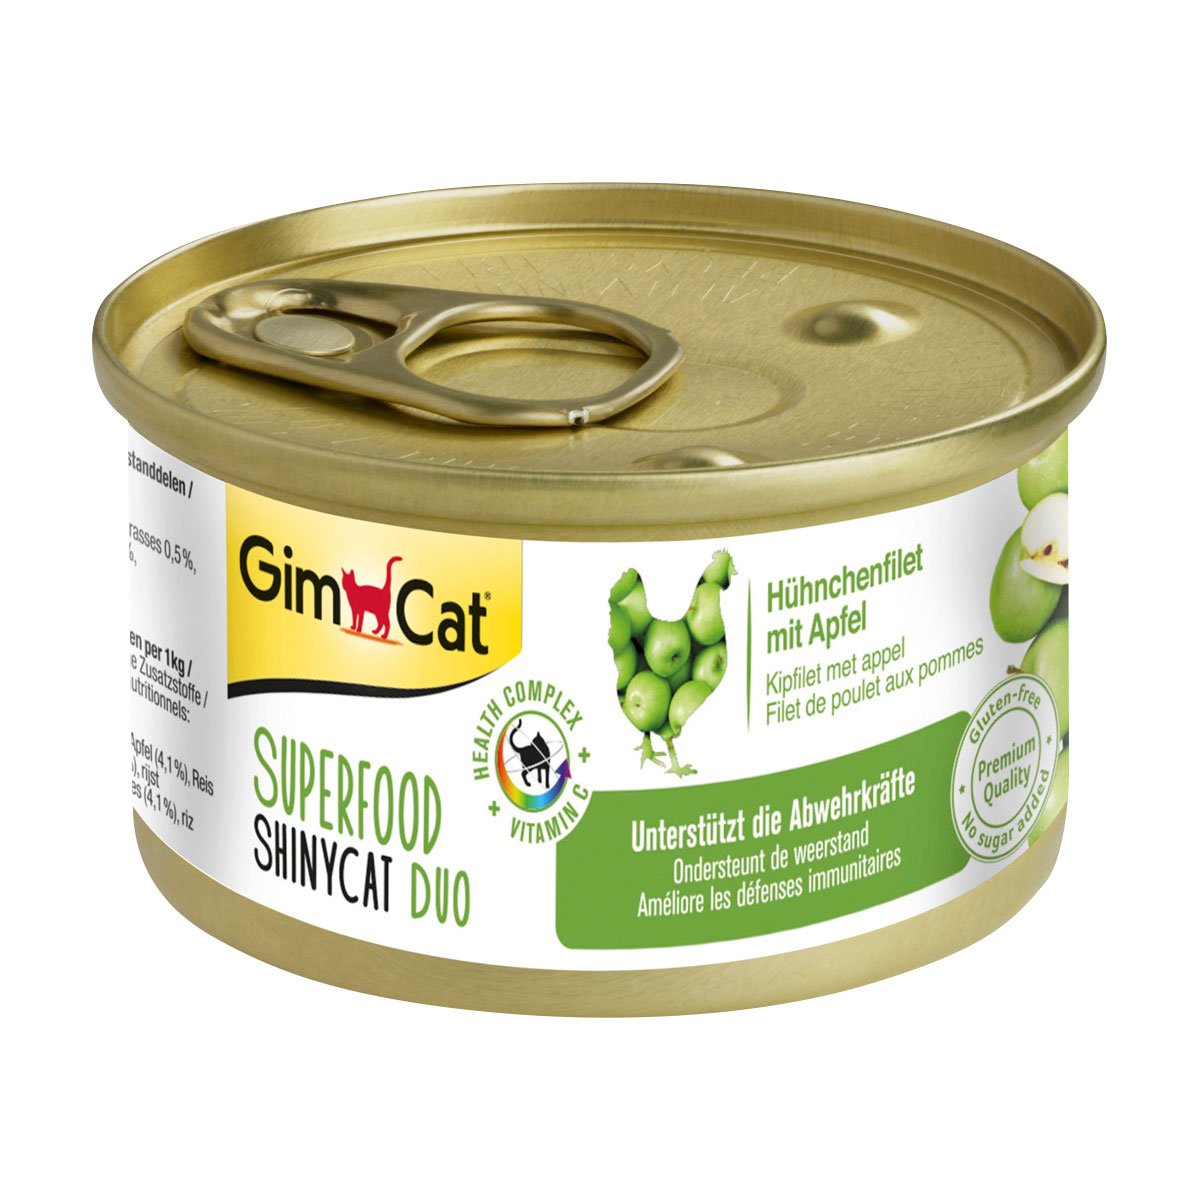 GimCat Superfood ShinyCat Duo Hühnchenfilet mit Äpfeln 24x70g von Gimcat